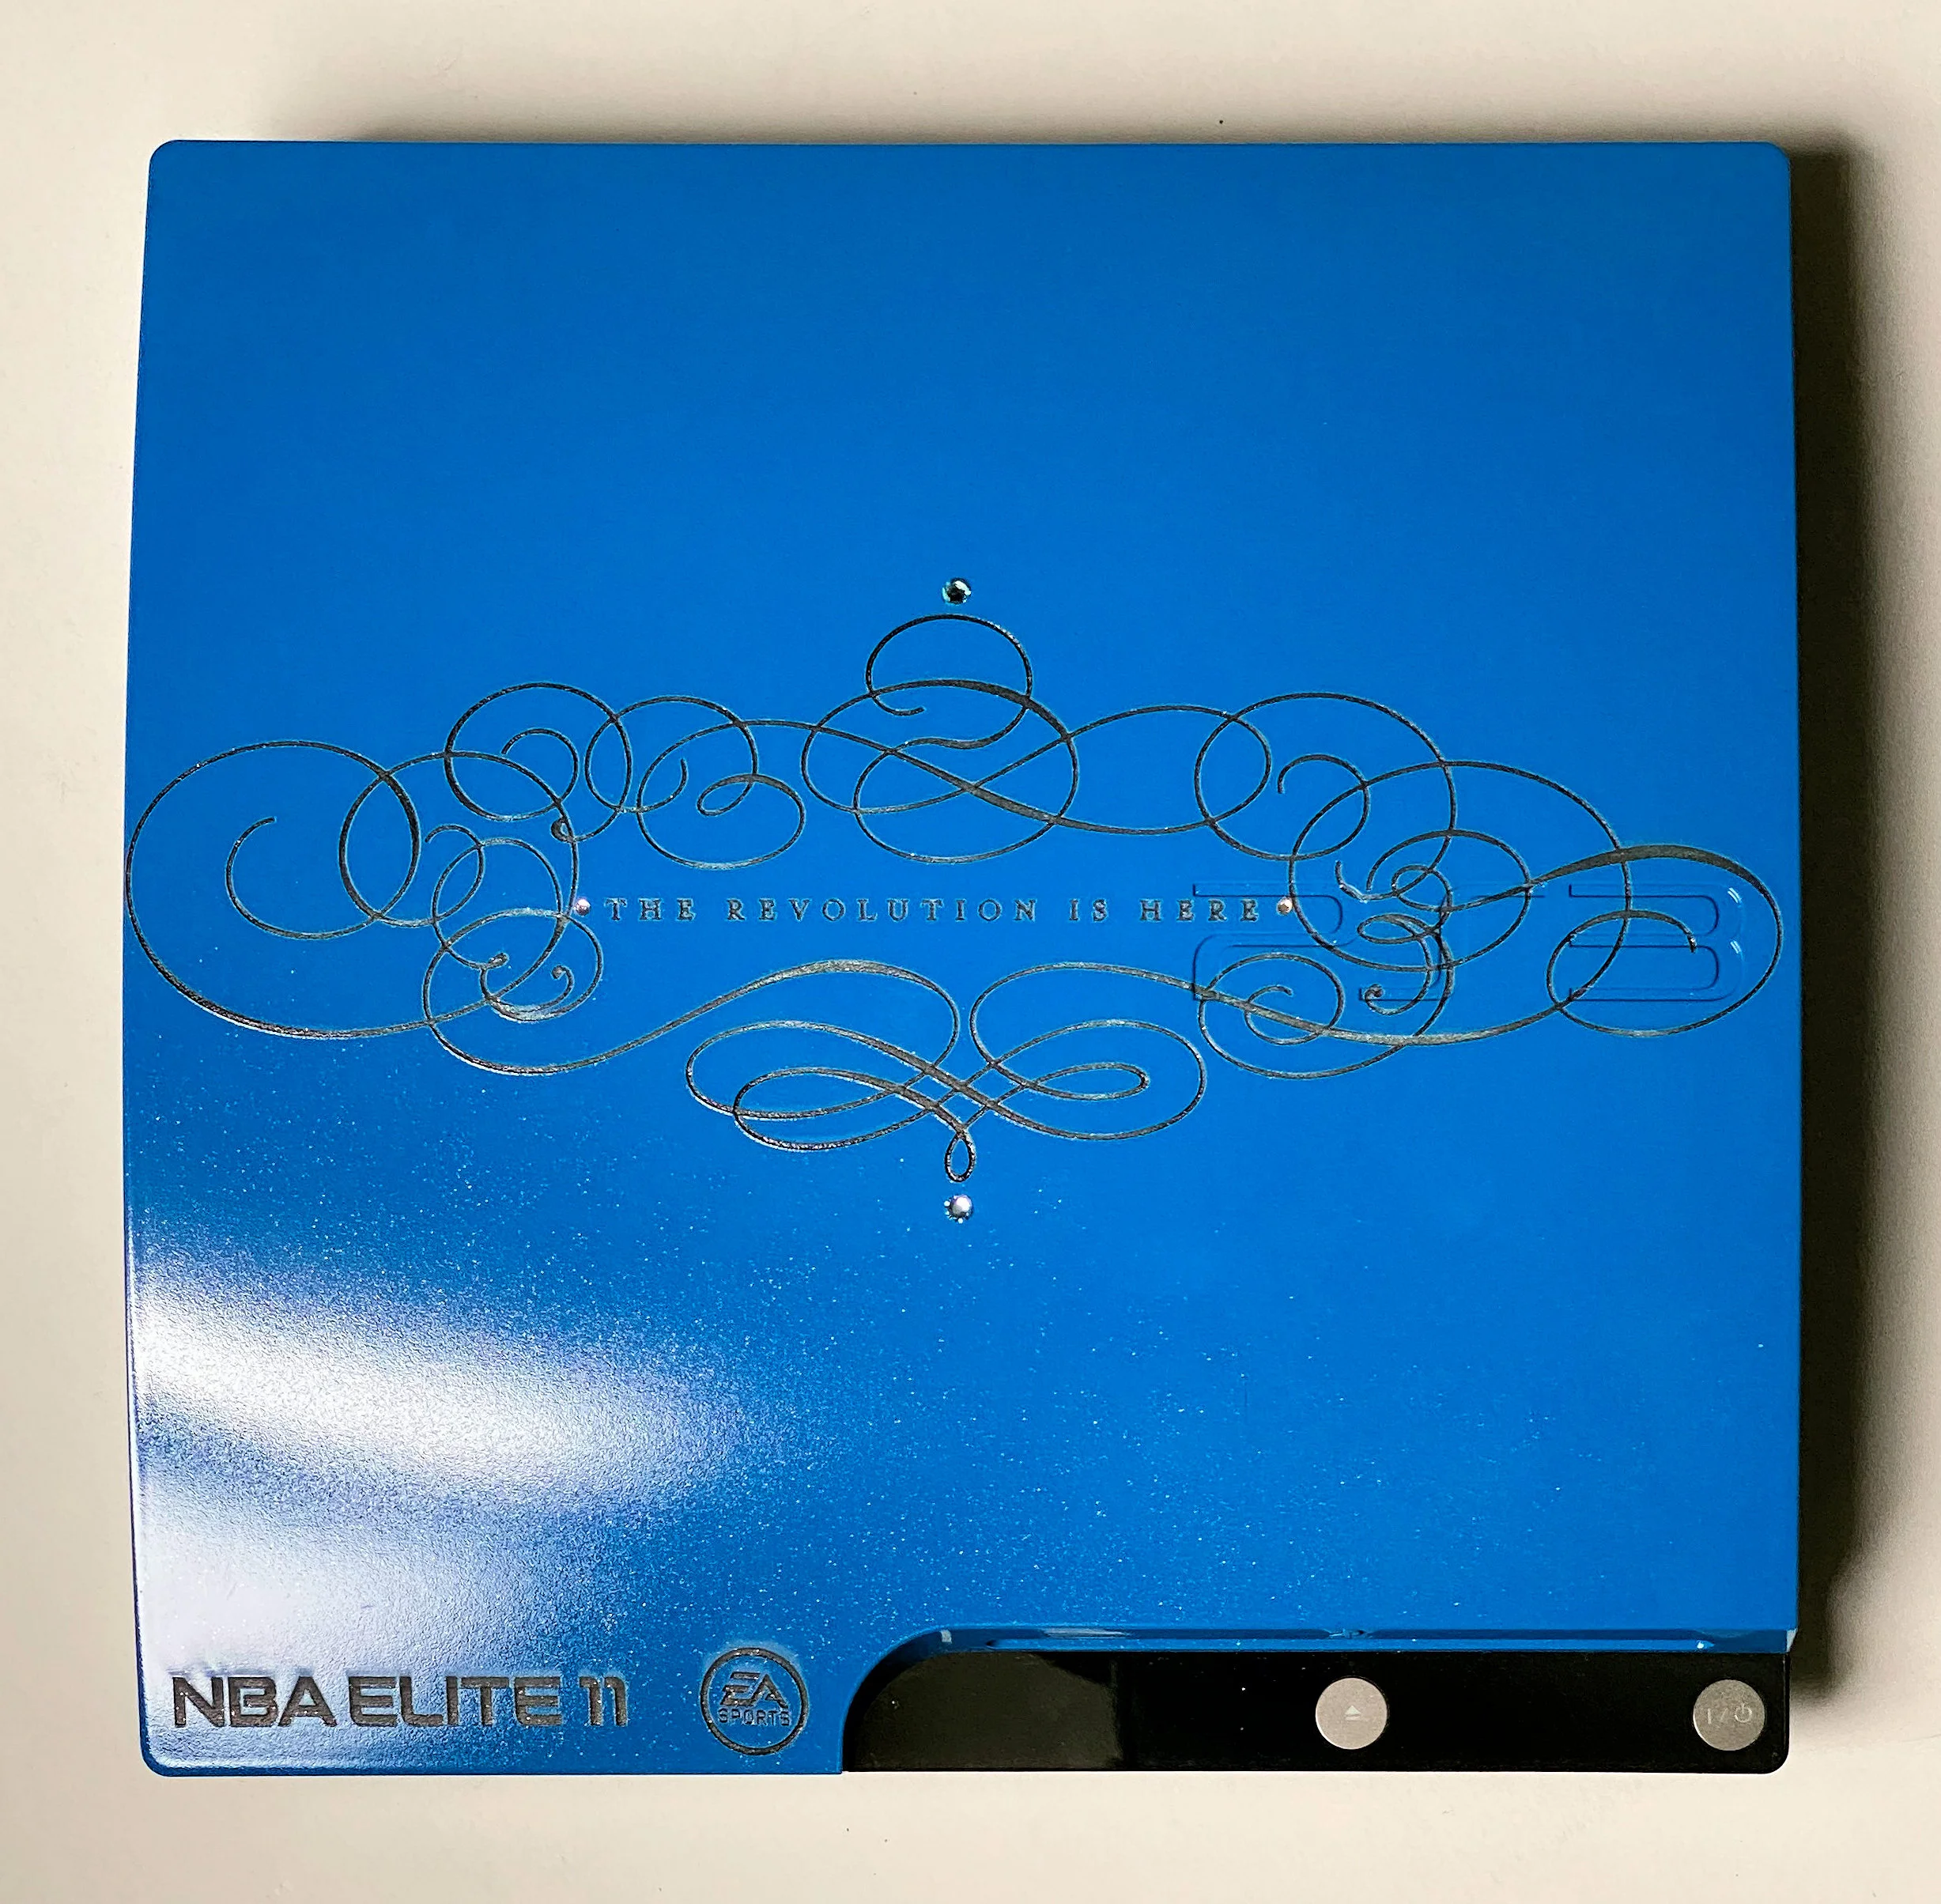 Sony PlayStation 3 NBA Elite 11 console